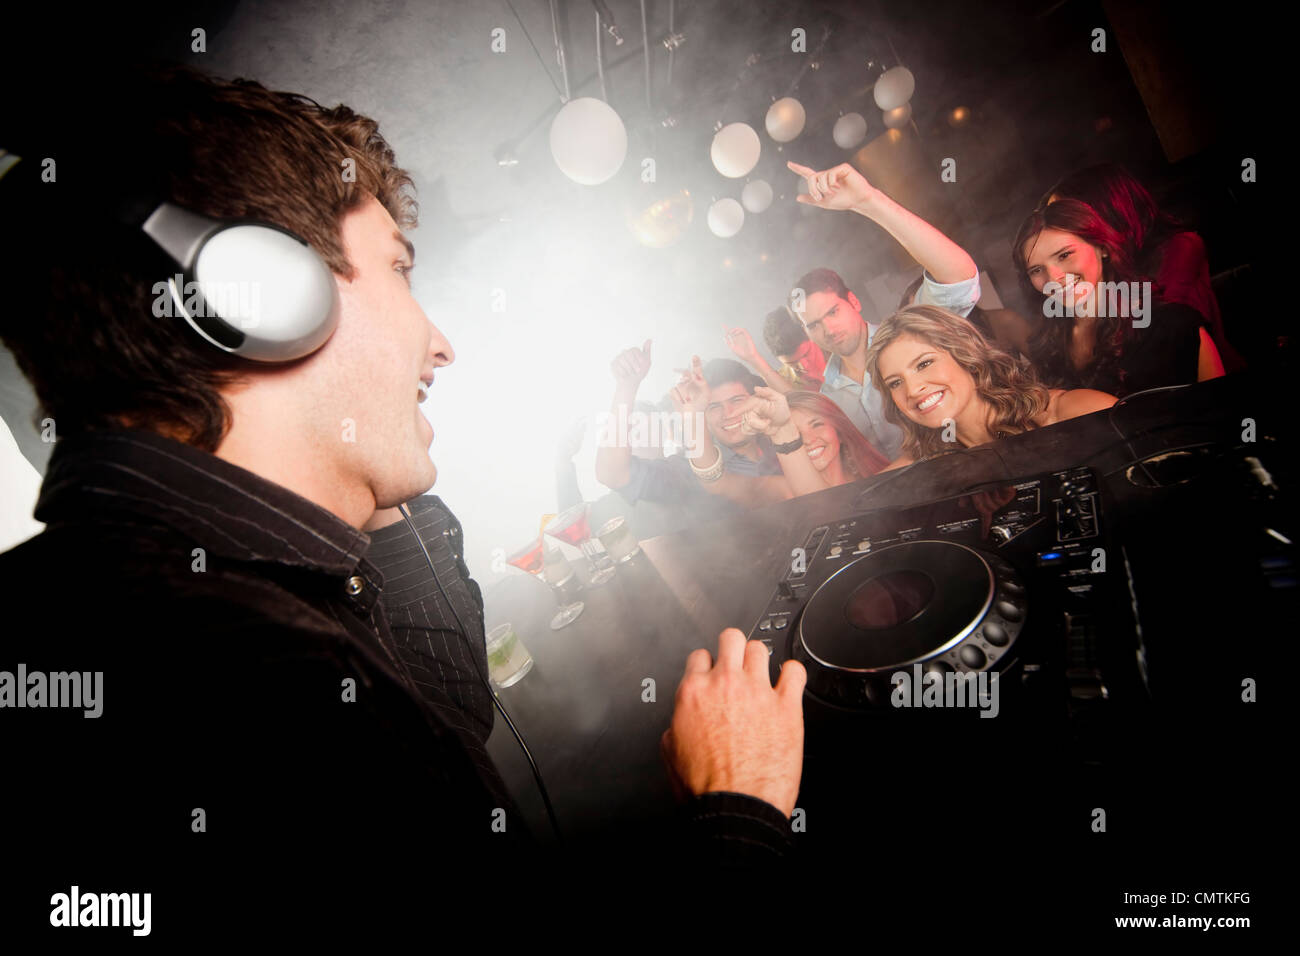 DJ playing music for crowd in nightclub Stock Photo